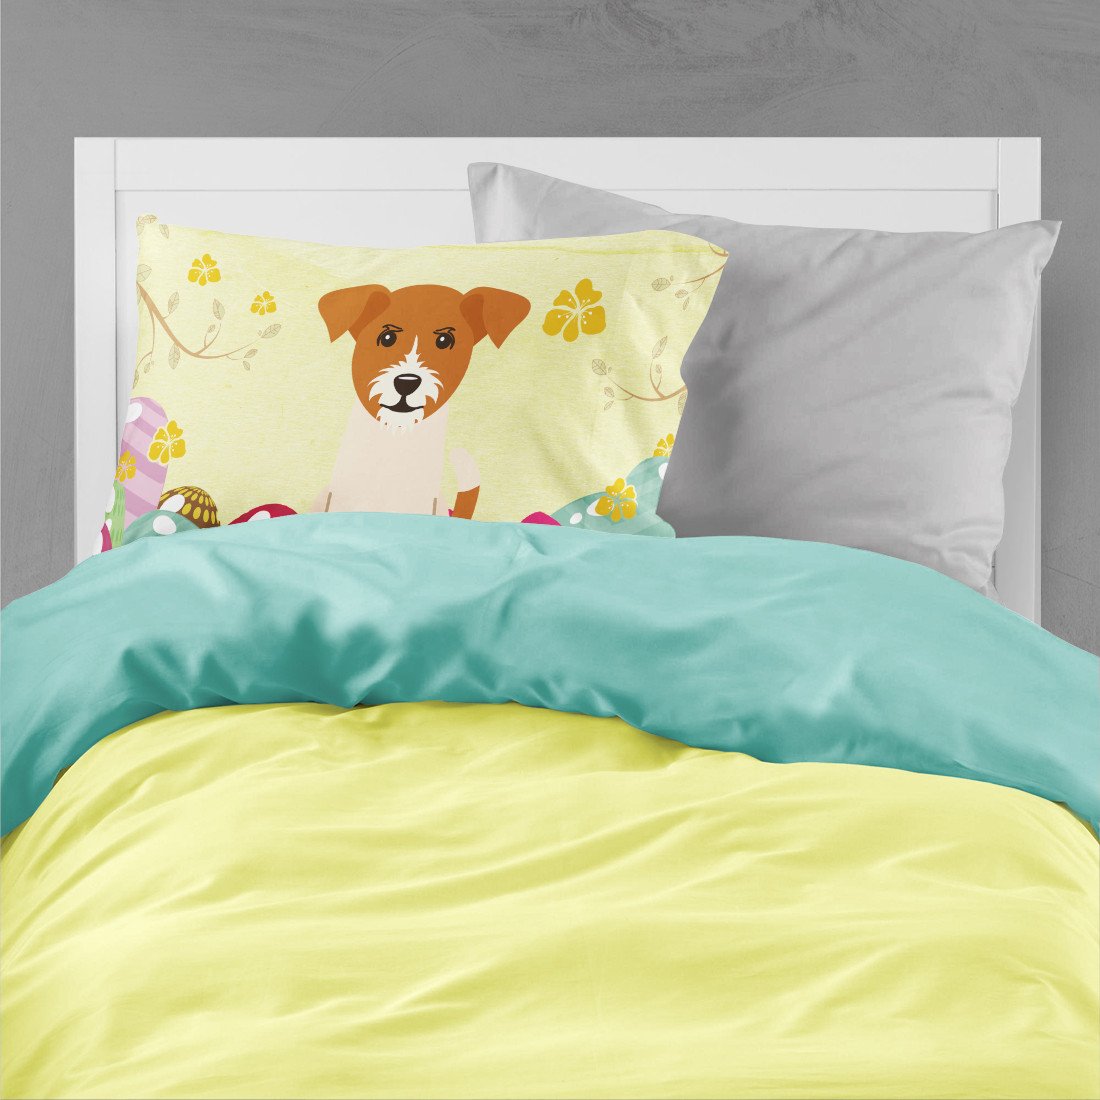 Easter Eggs Jack Russell Terrier Fabric Standard Pillowcase BB6108PILLOWCASE by Caroline's Treasures